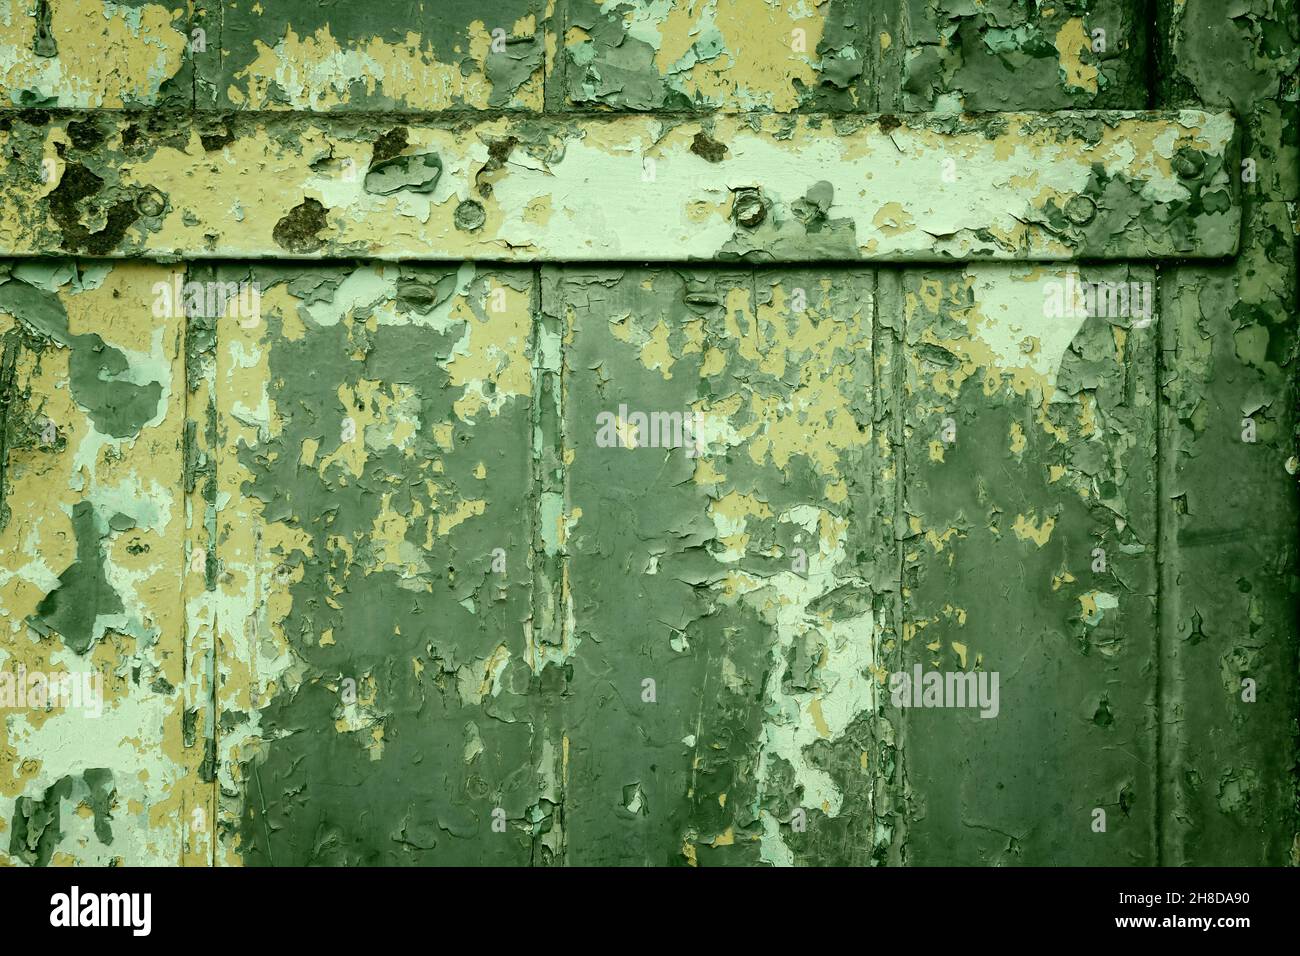 Peeling paint texture. Grunge style old wooden door background. Stock Photo